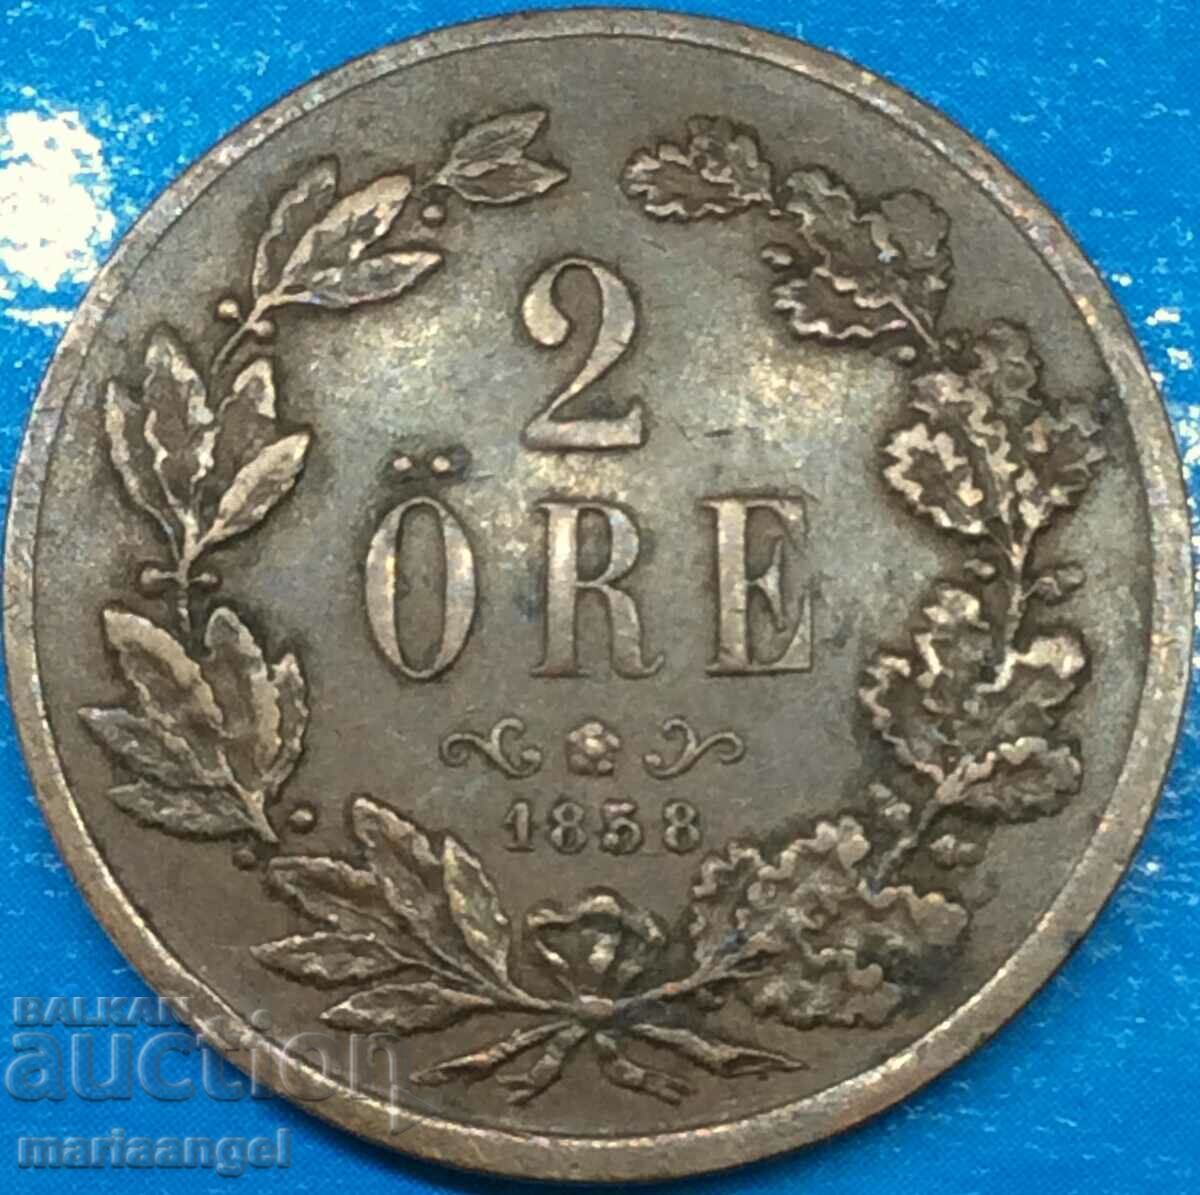 Sweden 2 ore 1858 King Oscar copper